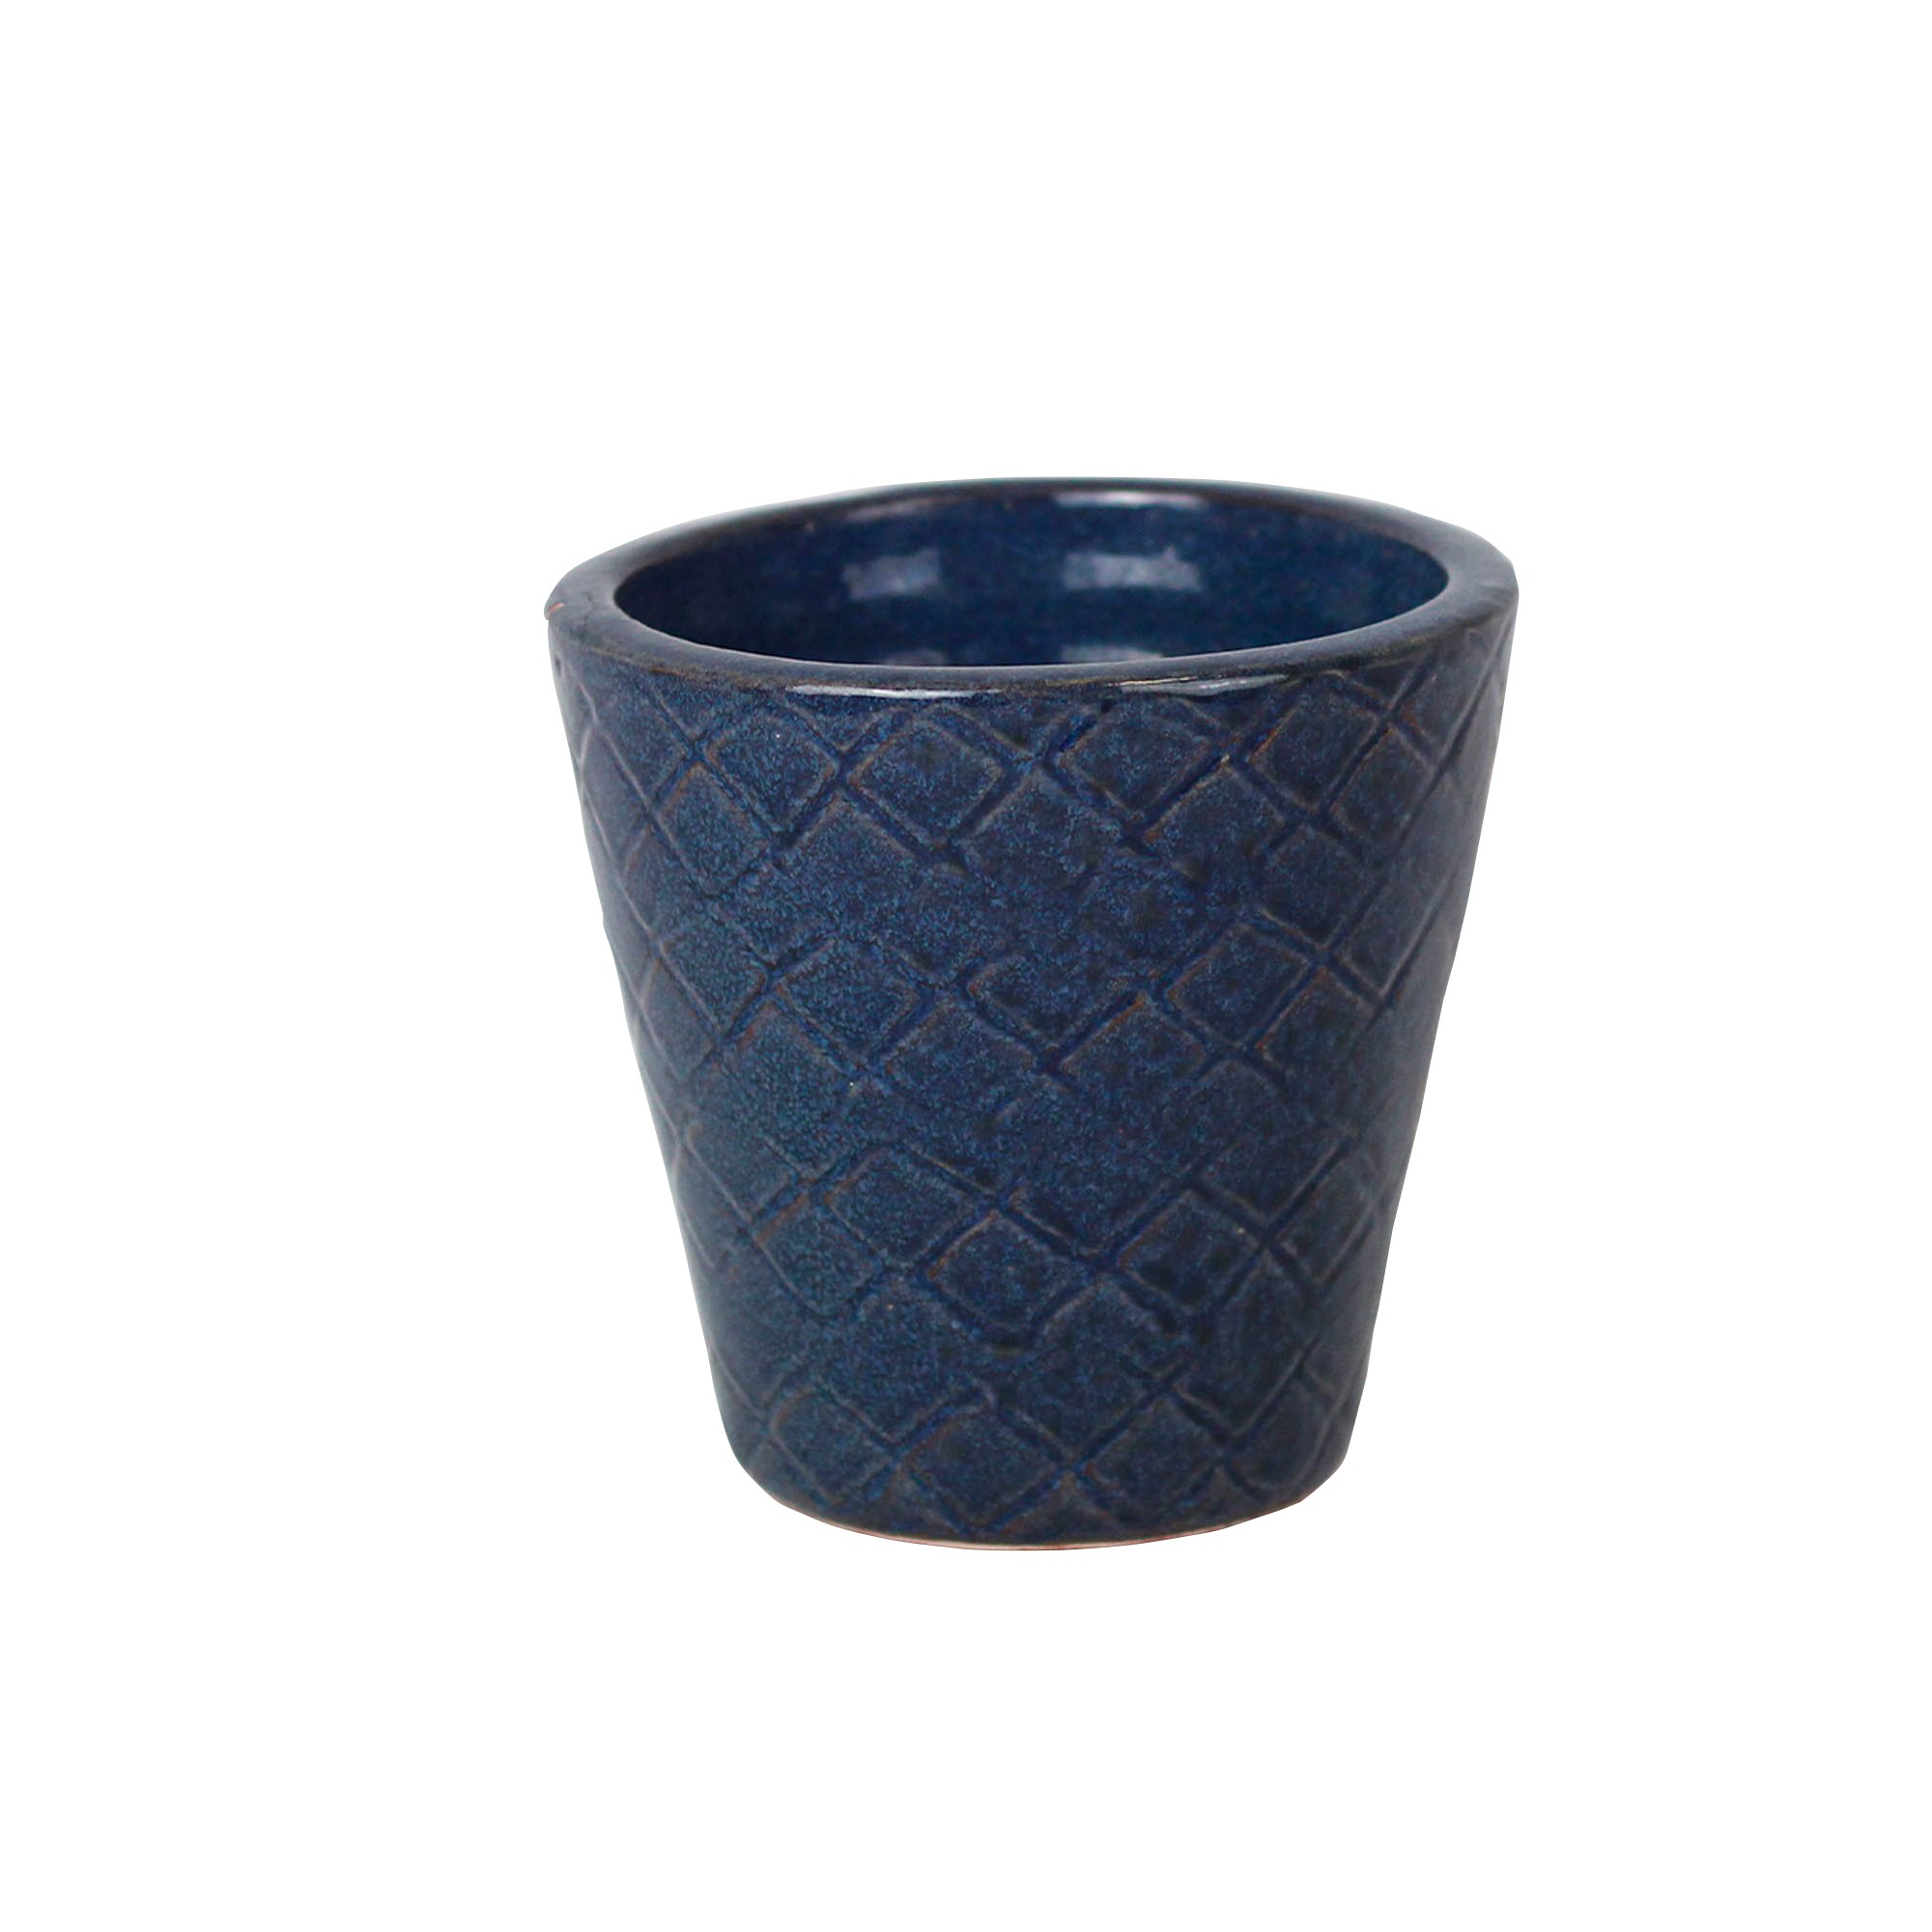 Übertopf aus Keramik blau aus Portugal kaufen